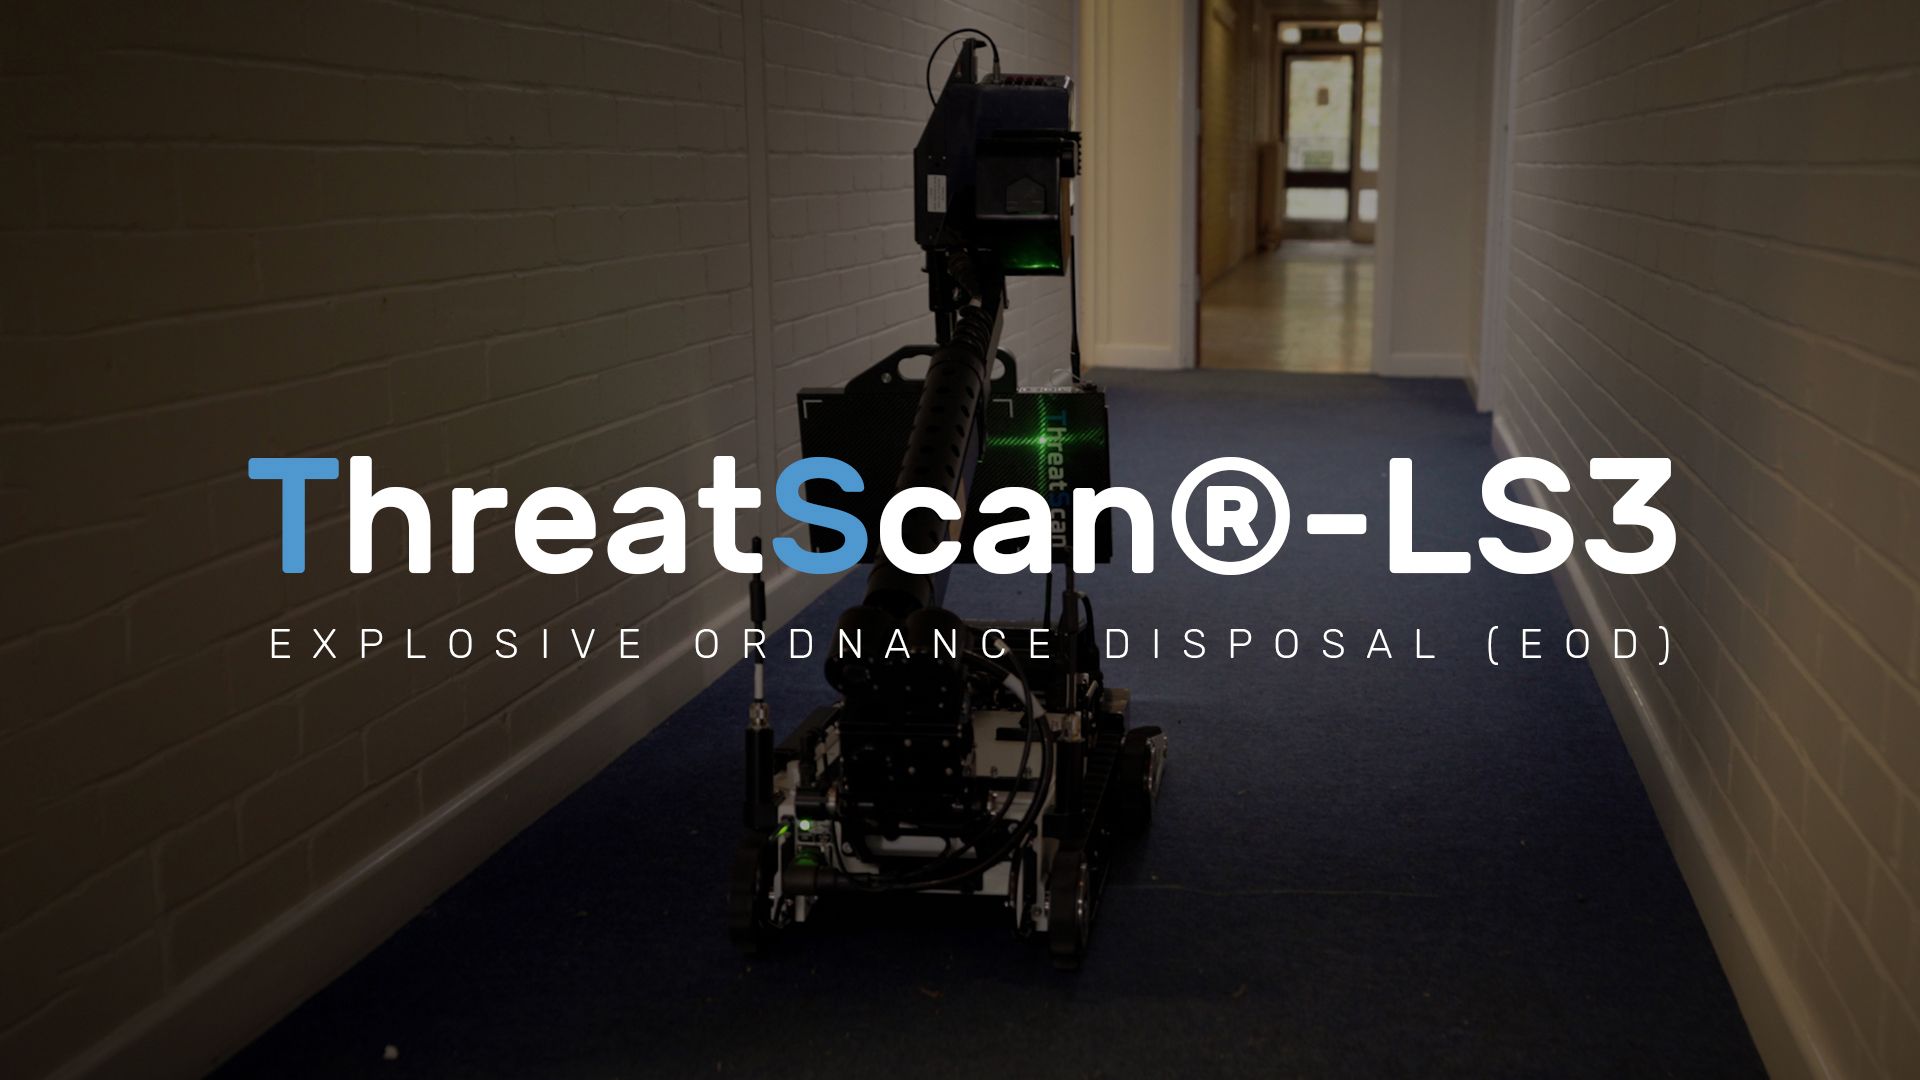 ThreatScan-LS3 with robot